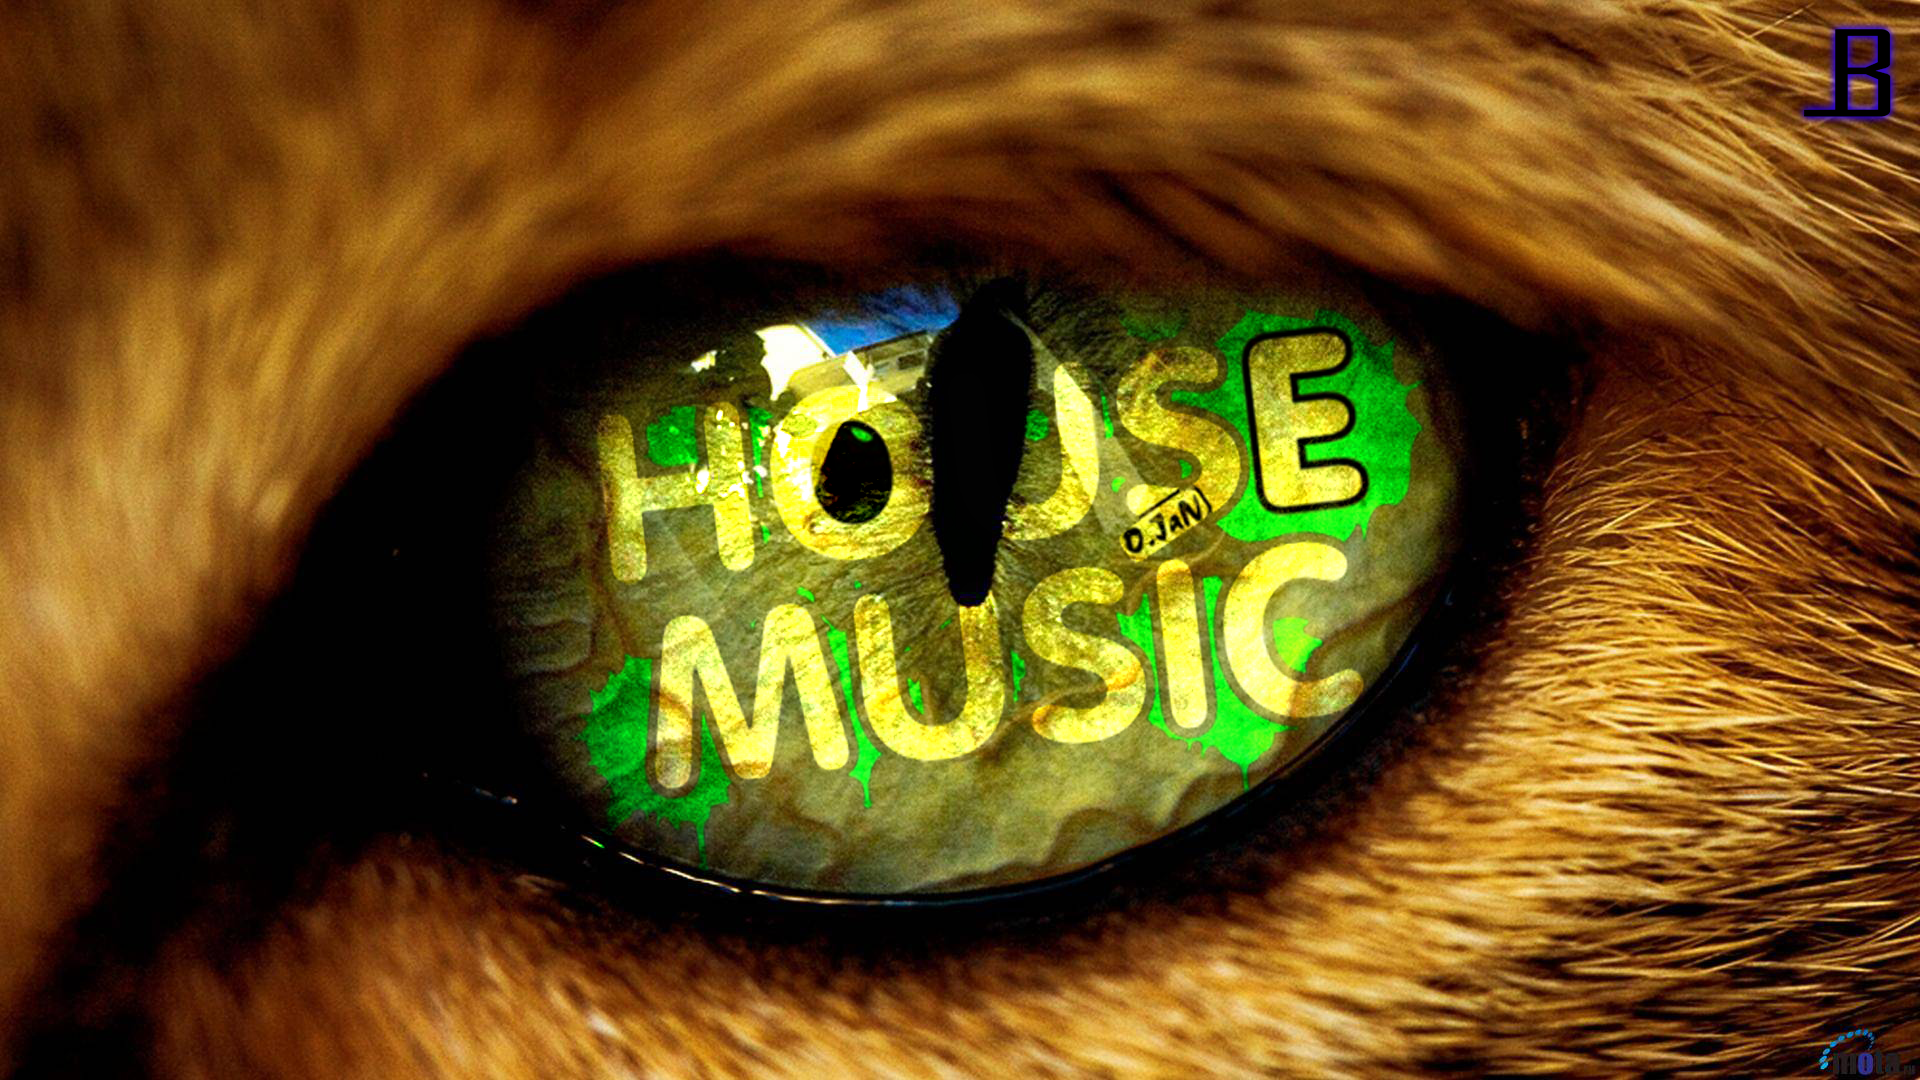 House Music wallpaper HD by LeadBeats on